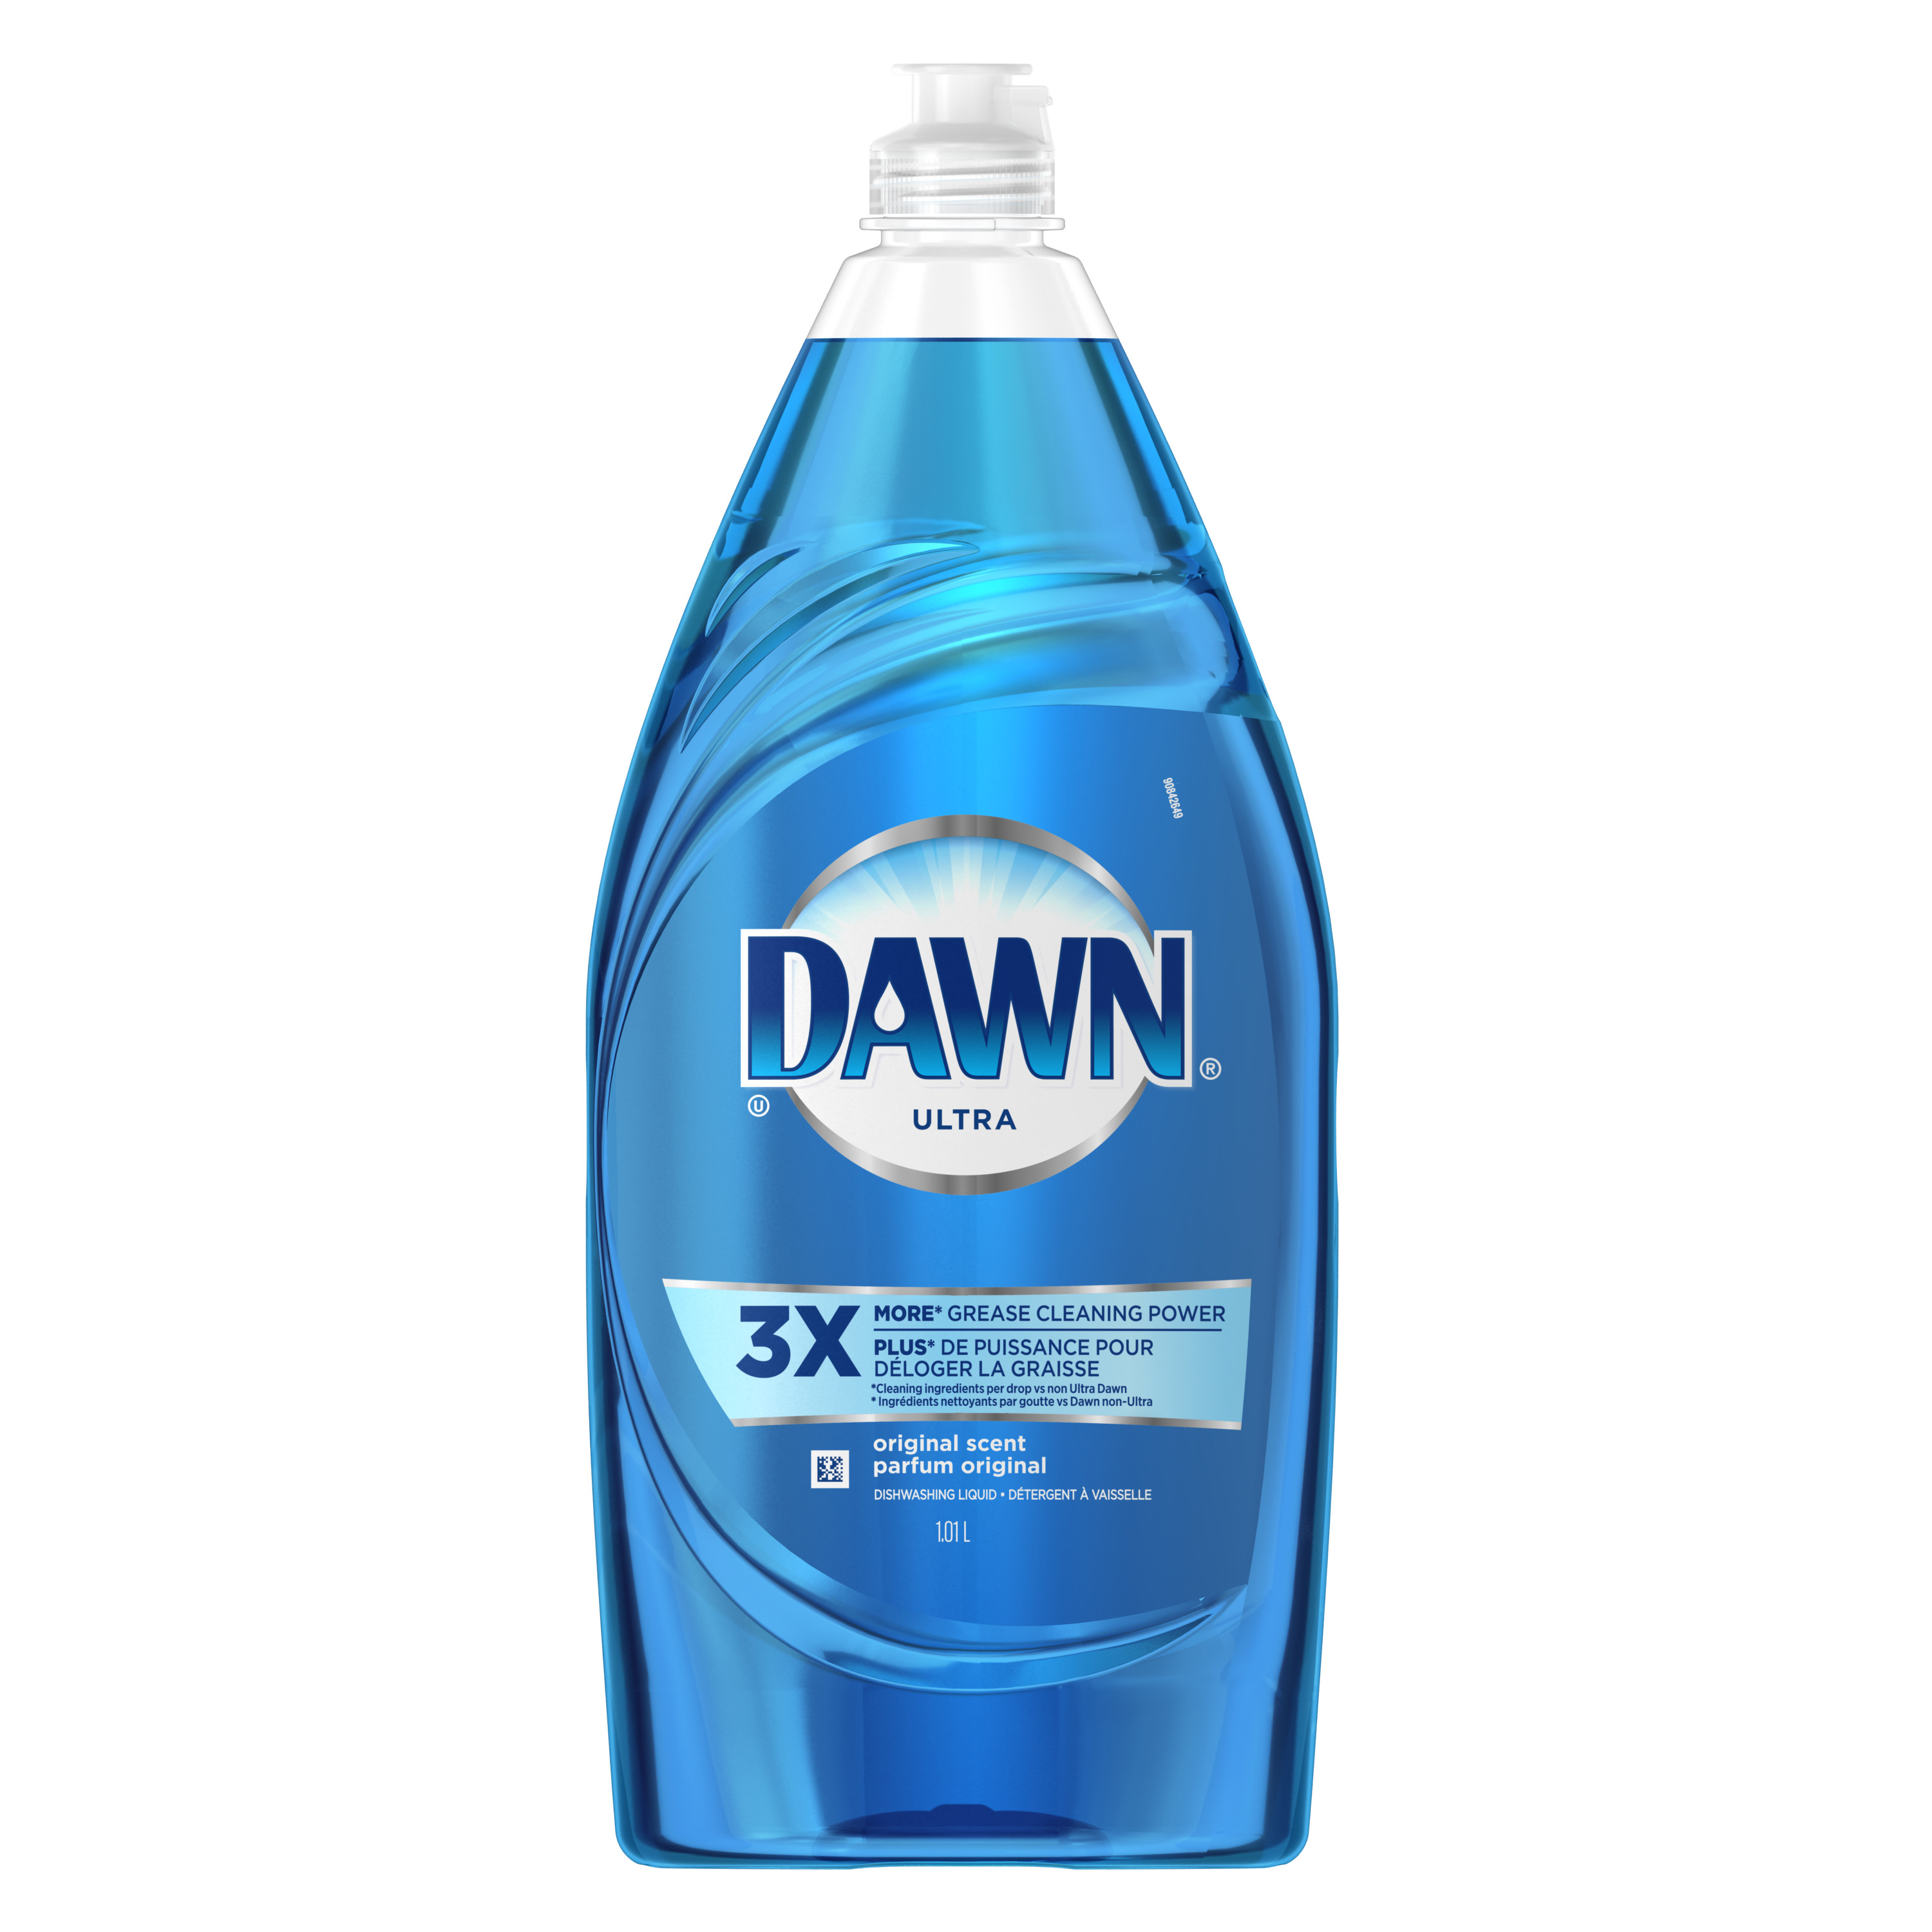 Dawn Ultra Dishwashing Liquid Dish Soap, Original Scent, 1.01 L - image 1 of 7